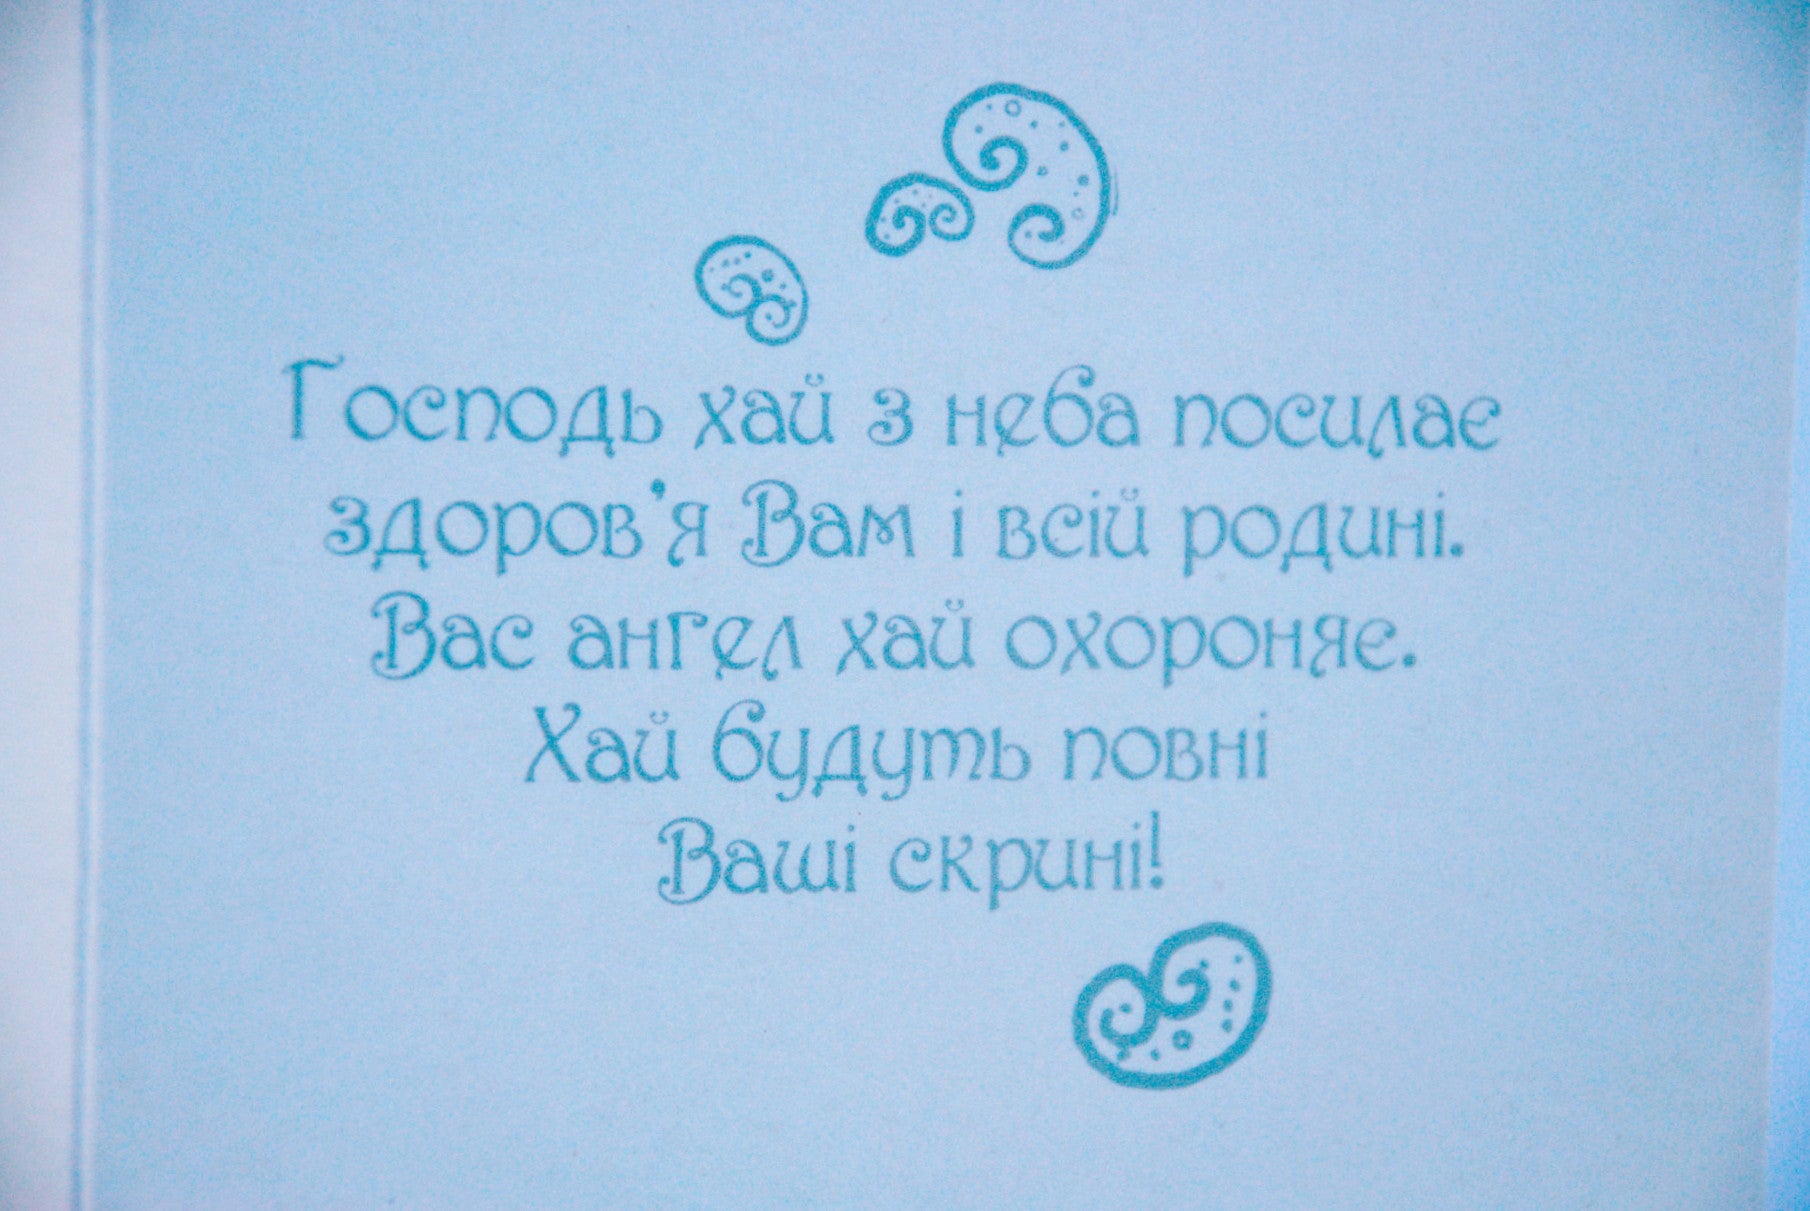 Ukrainian greeting card